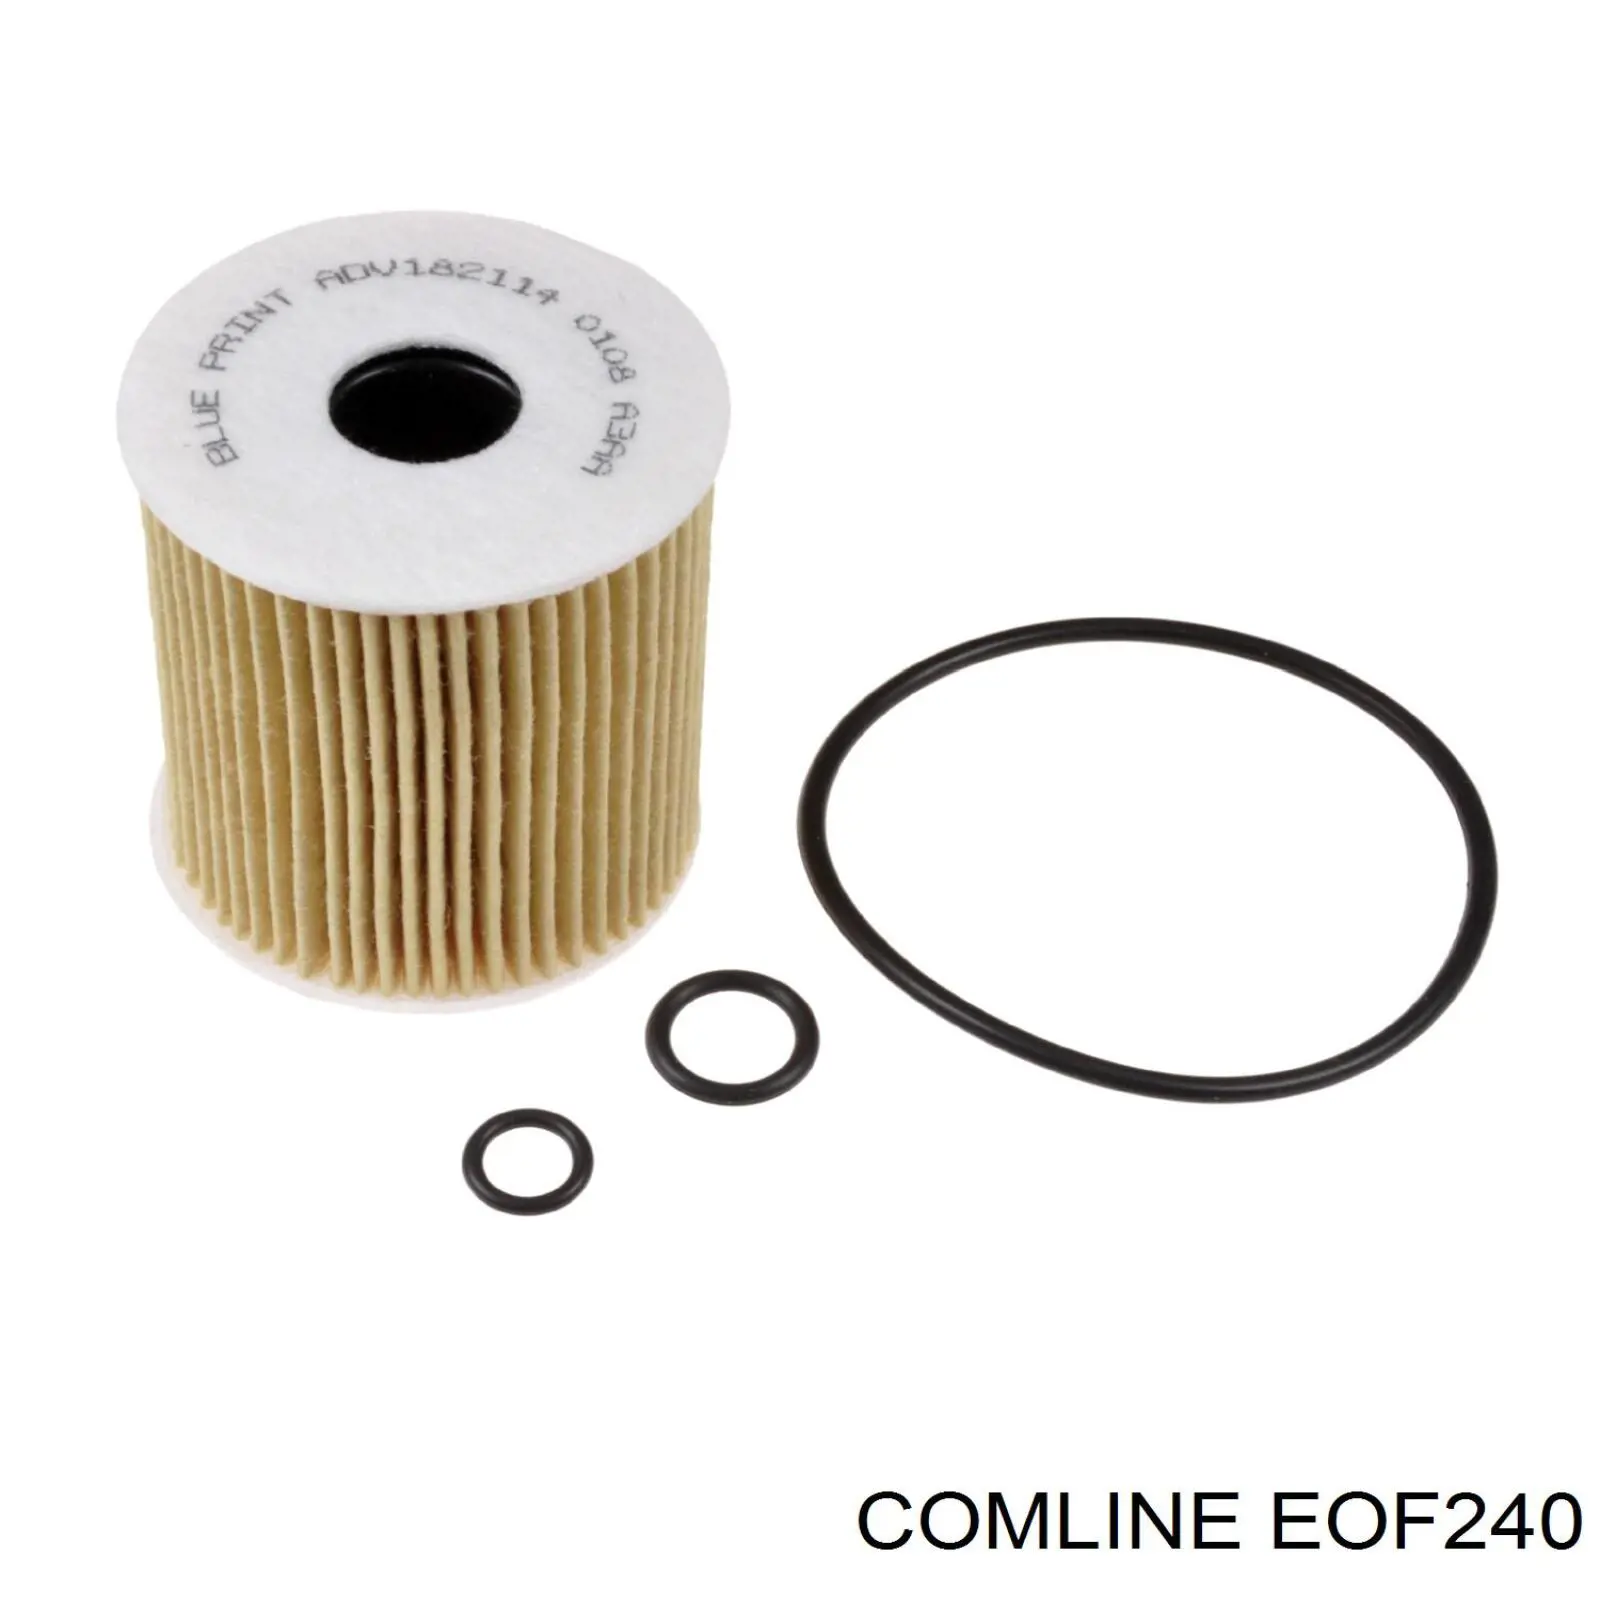 EOF240 Comline filtro de aceite